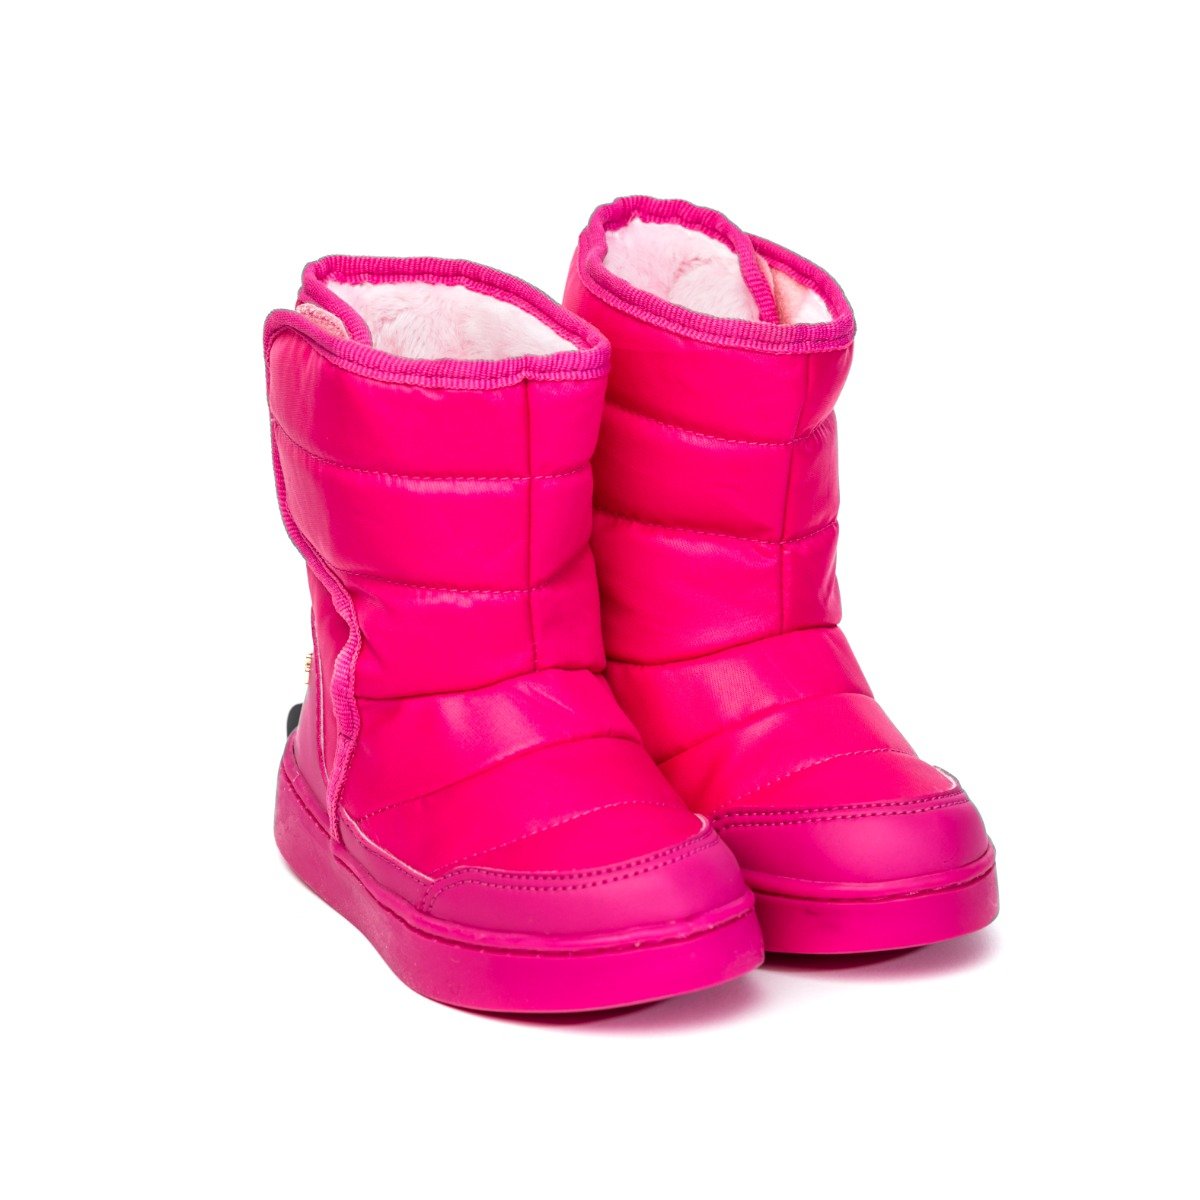 Ghete cu blanita, Bibi Shoes, Urban Boots, Rosa (Rosa) imagine 2022 protejamcopilaria.ro